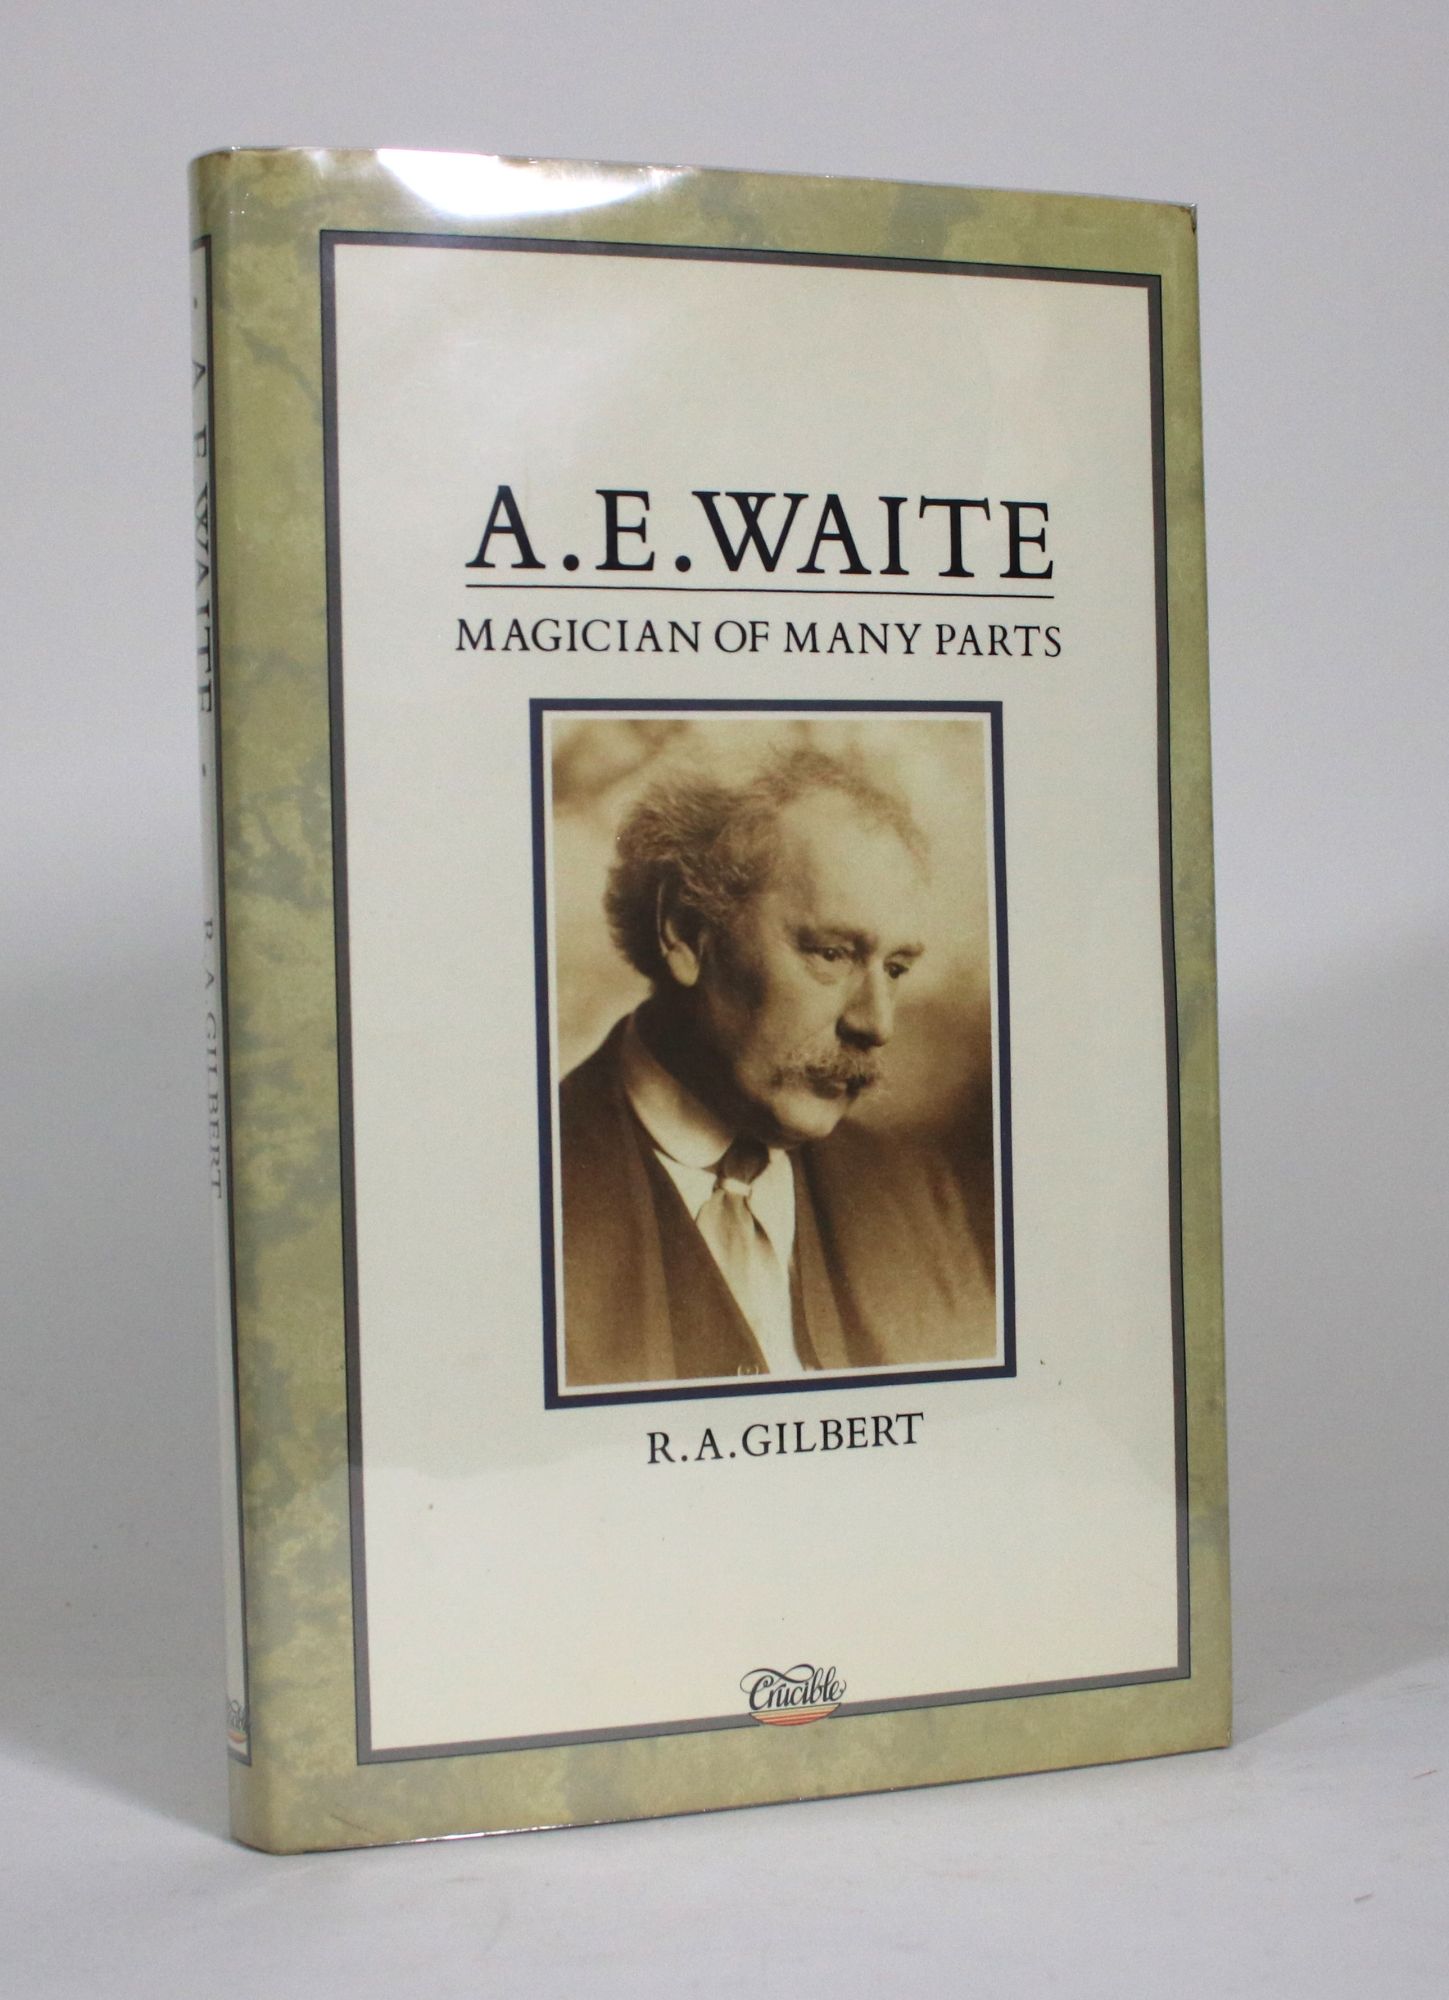 A.E. Waite: Magician of Many Parts